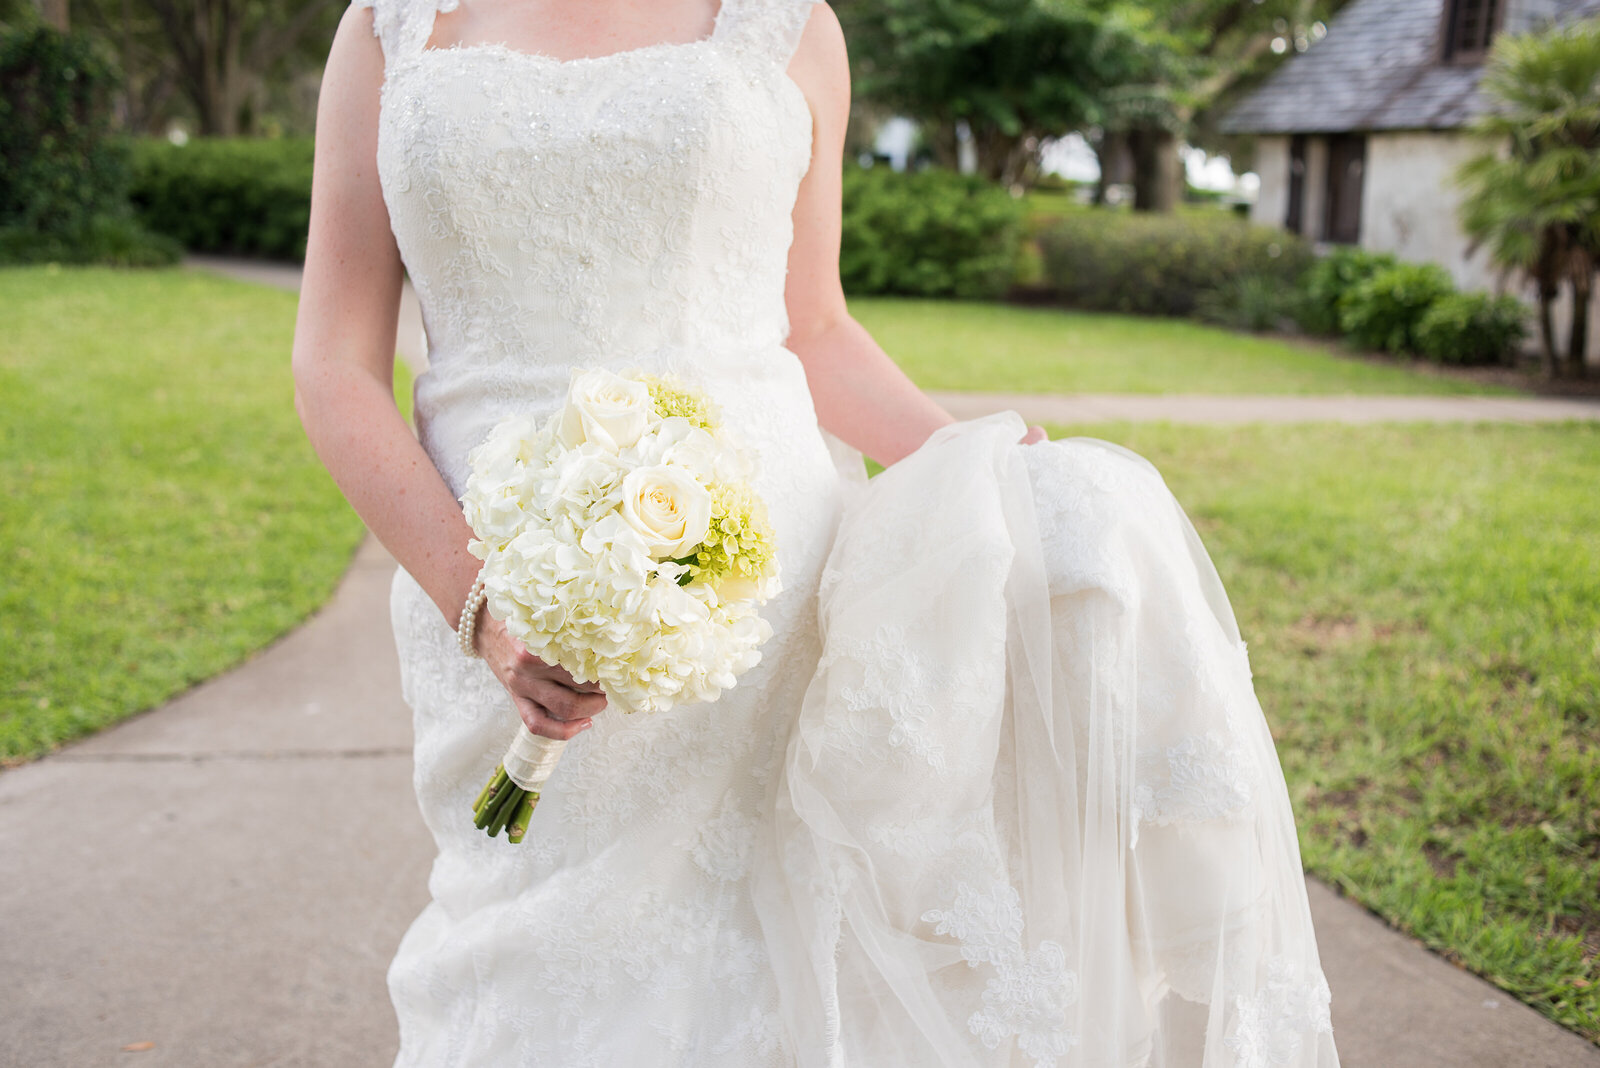 St Simons Island Epworth wedding hydrangea bouquet lace dress Bride